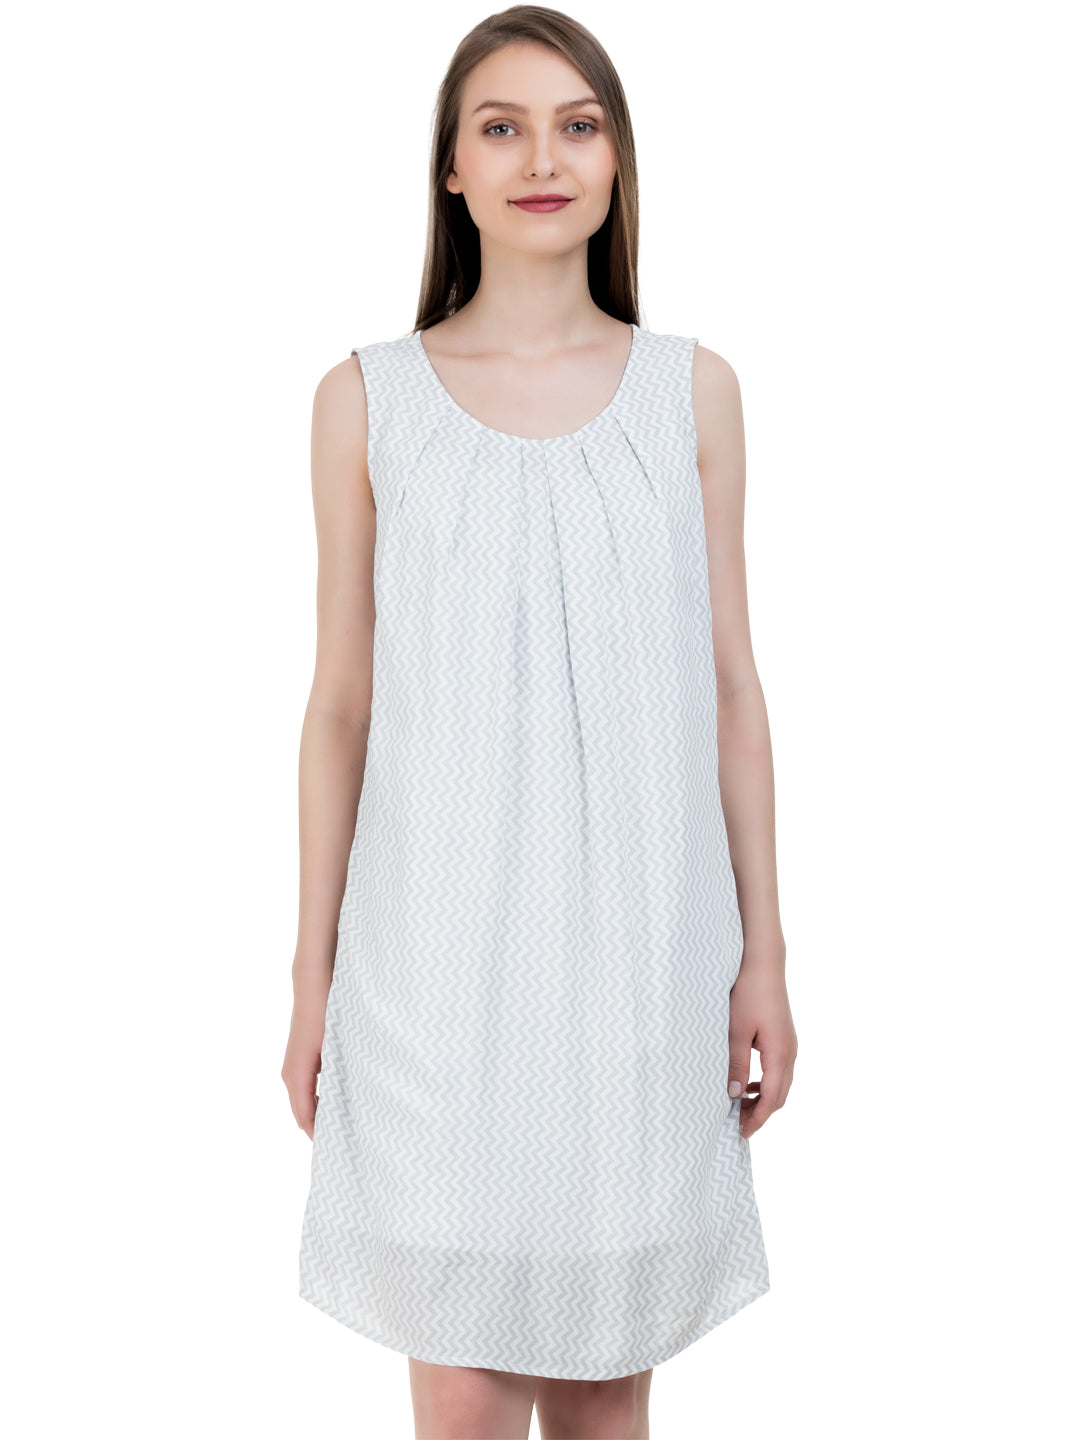 White sleeveless dress